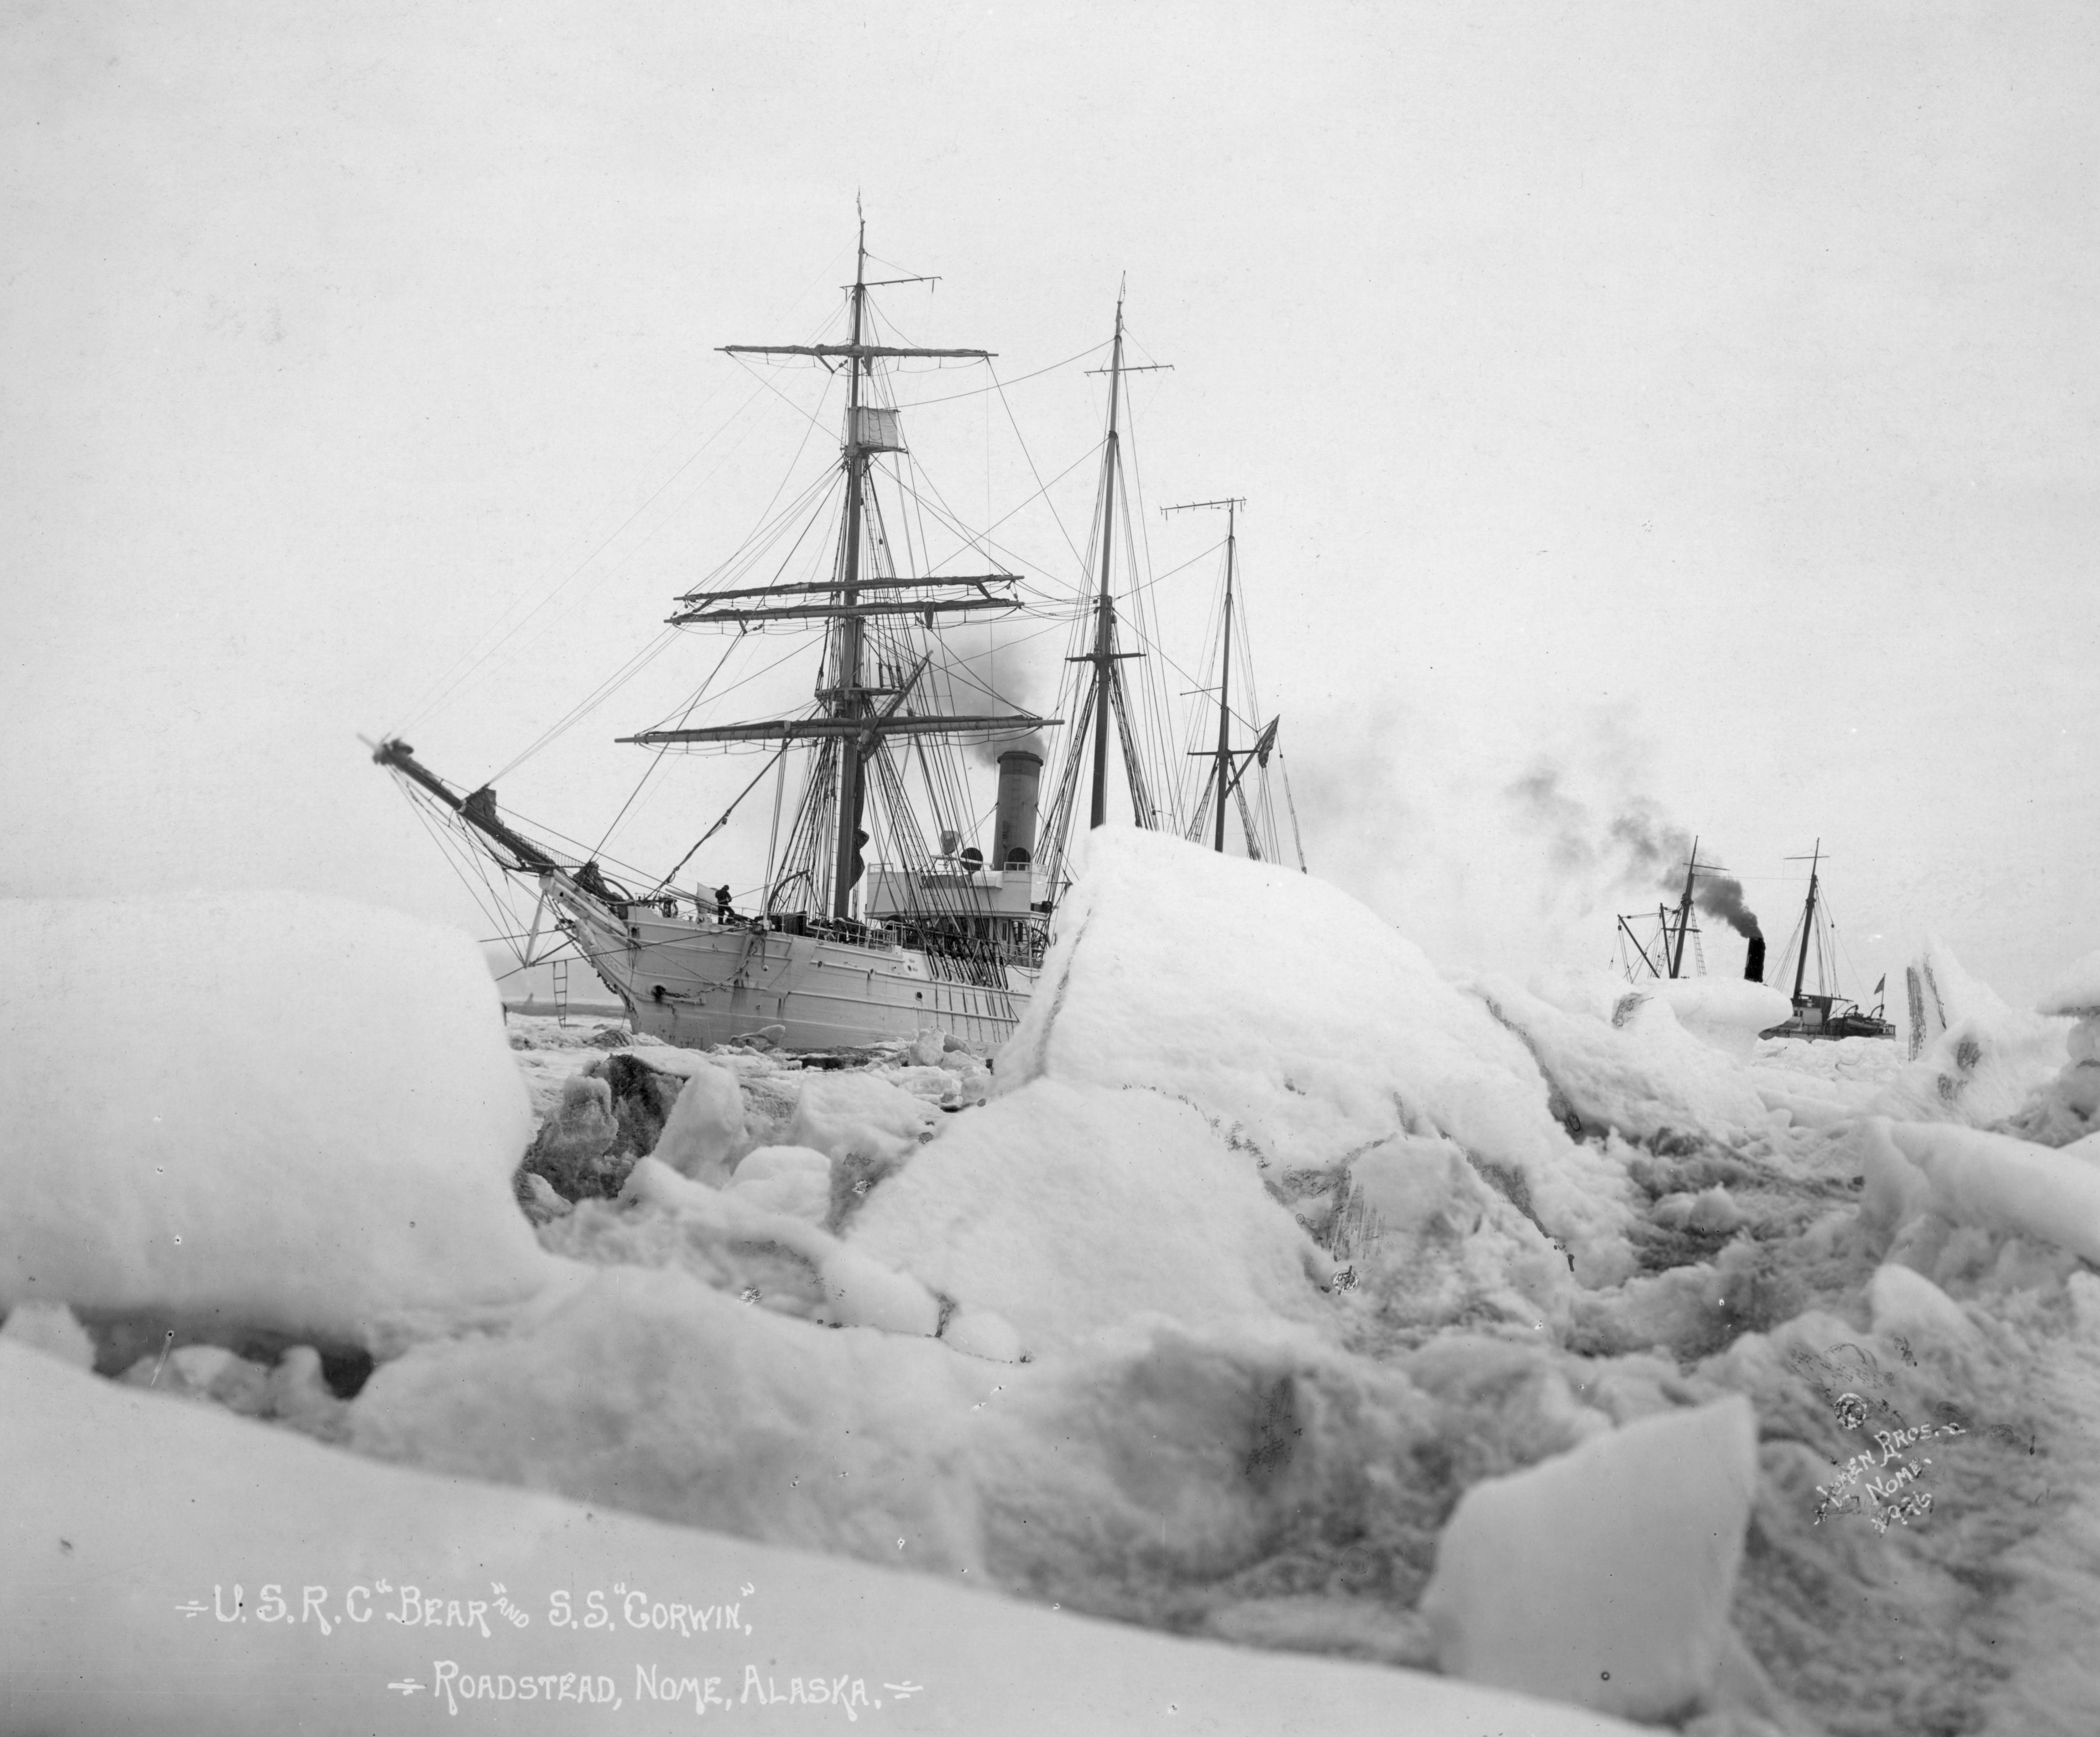 USRC Bear und SS Corwin in Alaska.